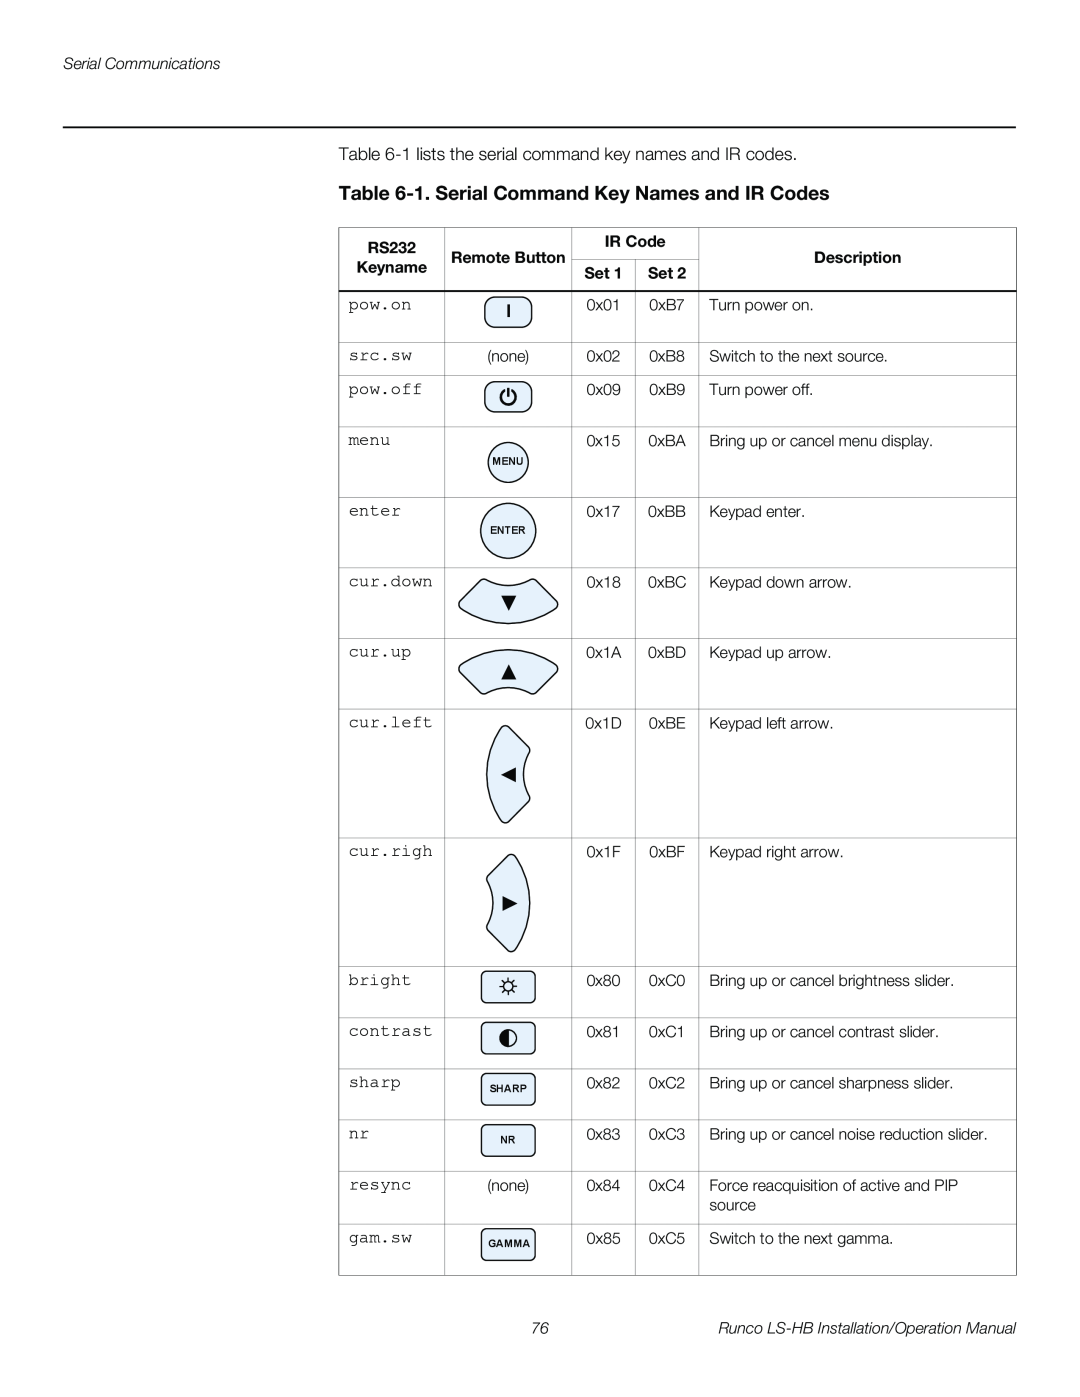 Runco LS-HB operation manual 1. Serial Command Key Names and IR Codes 